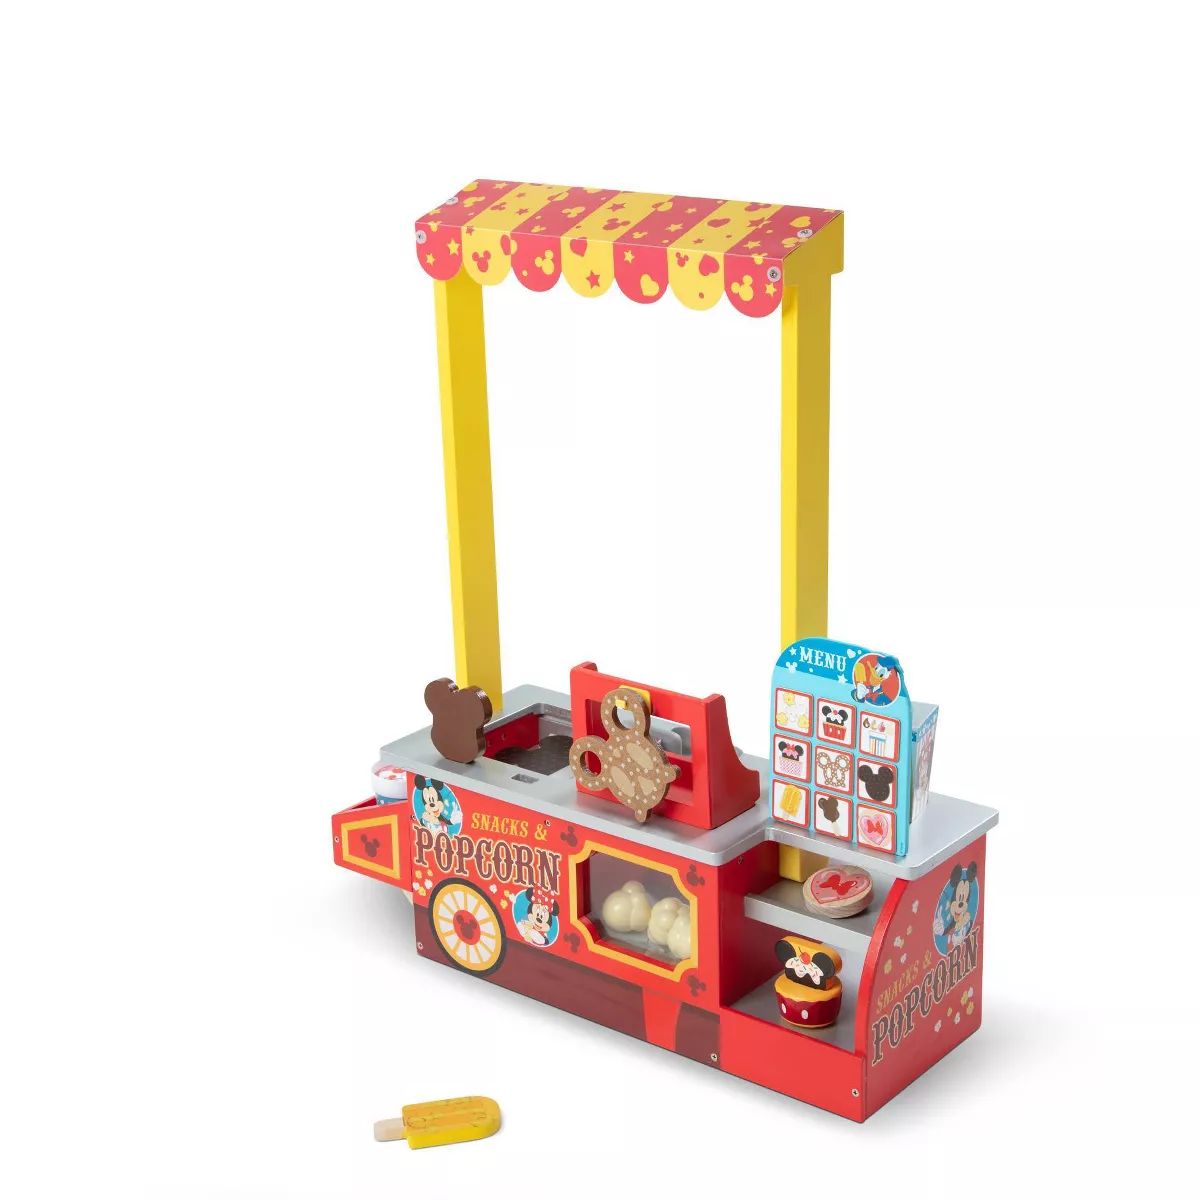 Melissa & Doug Disney Snacks & Popcorn Wooden Pretend Play Food Counter – 33pc | Target